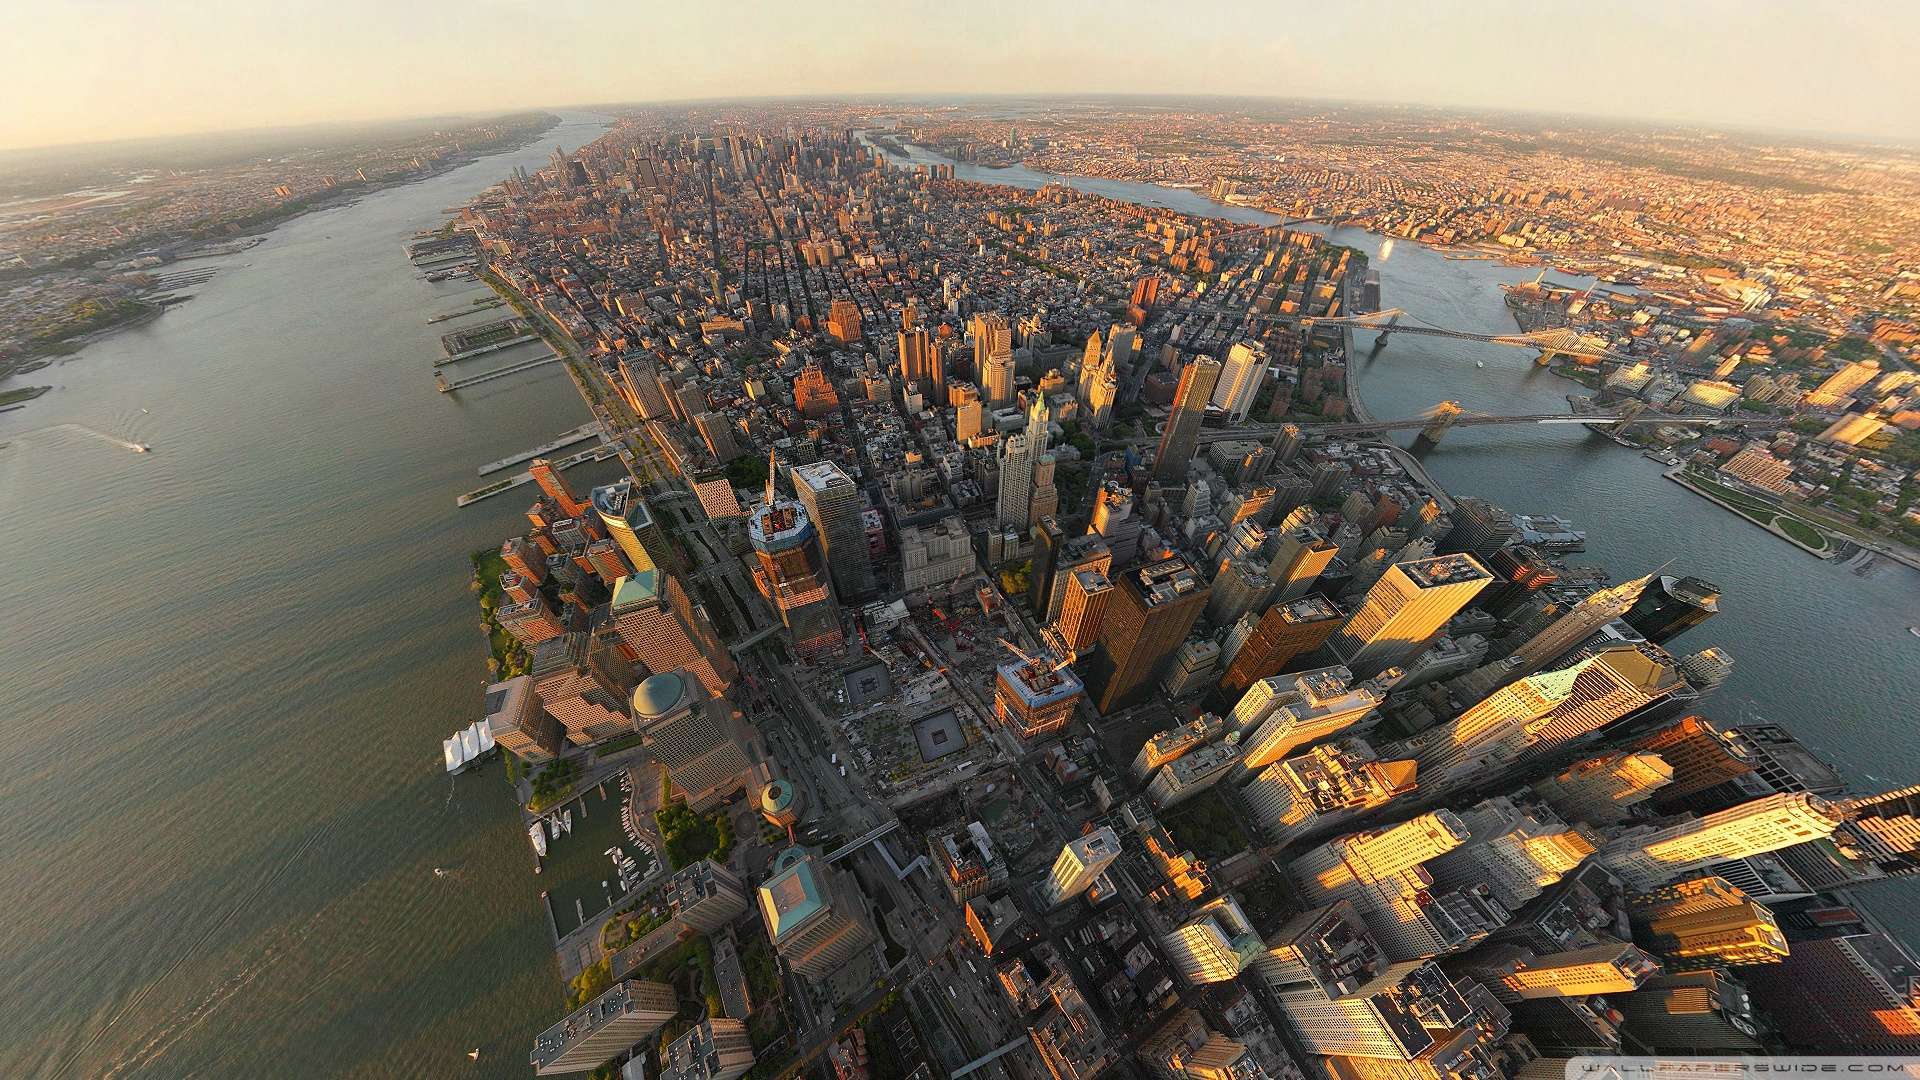 Download New York Aerial View 2 Wallpaper 1080p HD HDWallWidecom